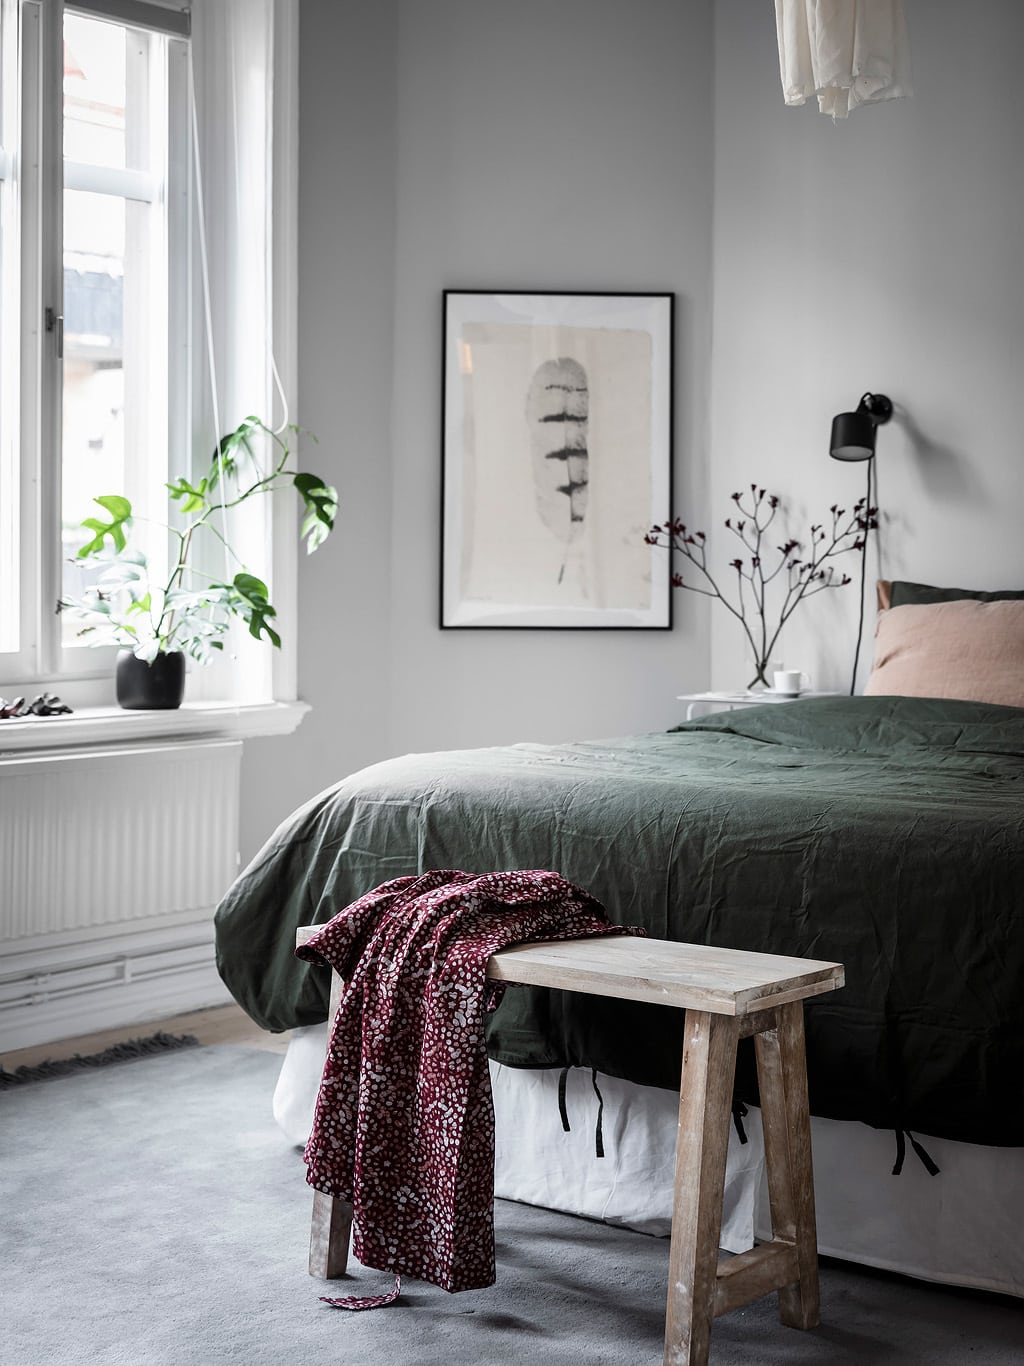 A light grey bedroom with dark green linen bedding